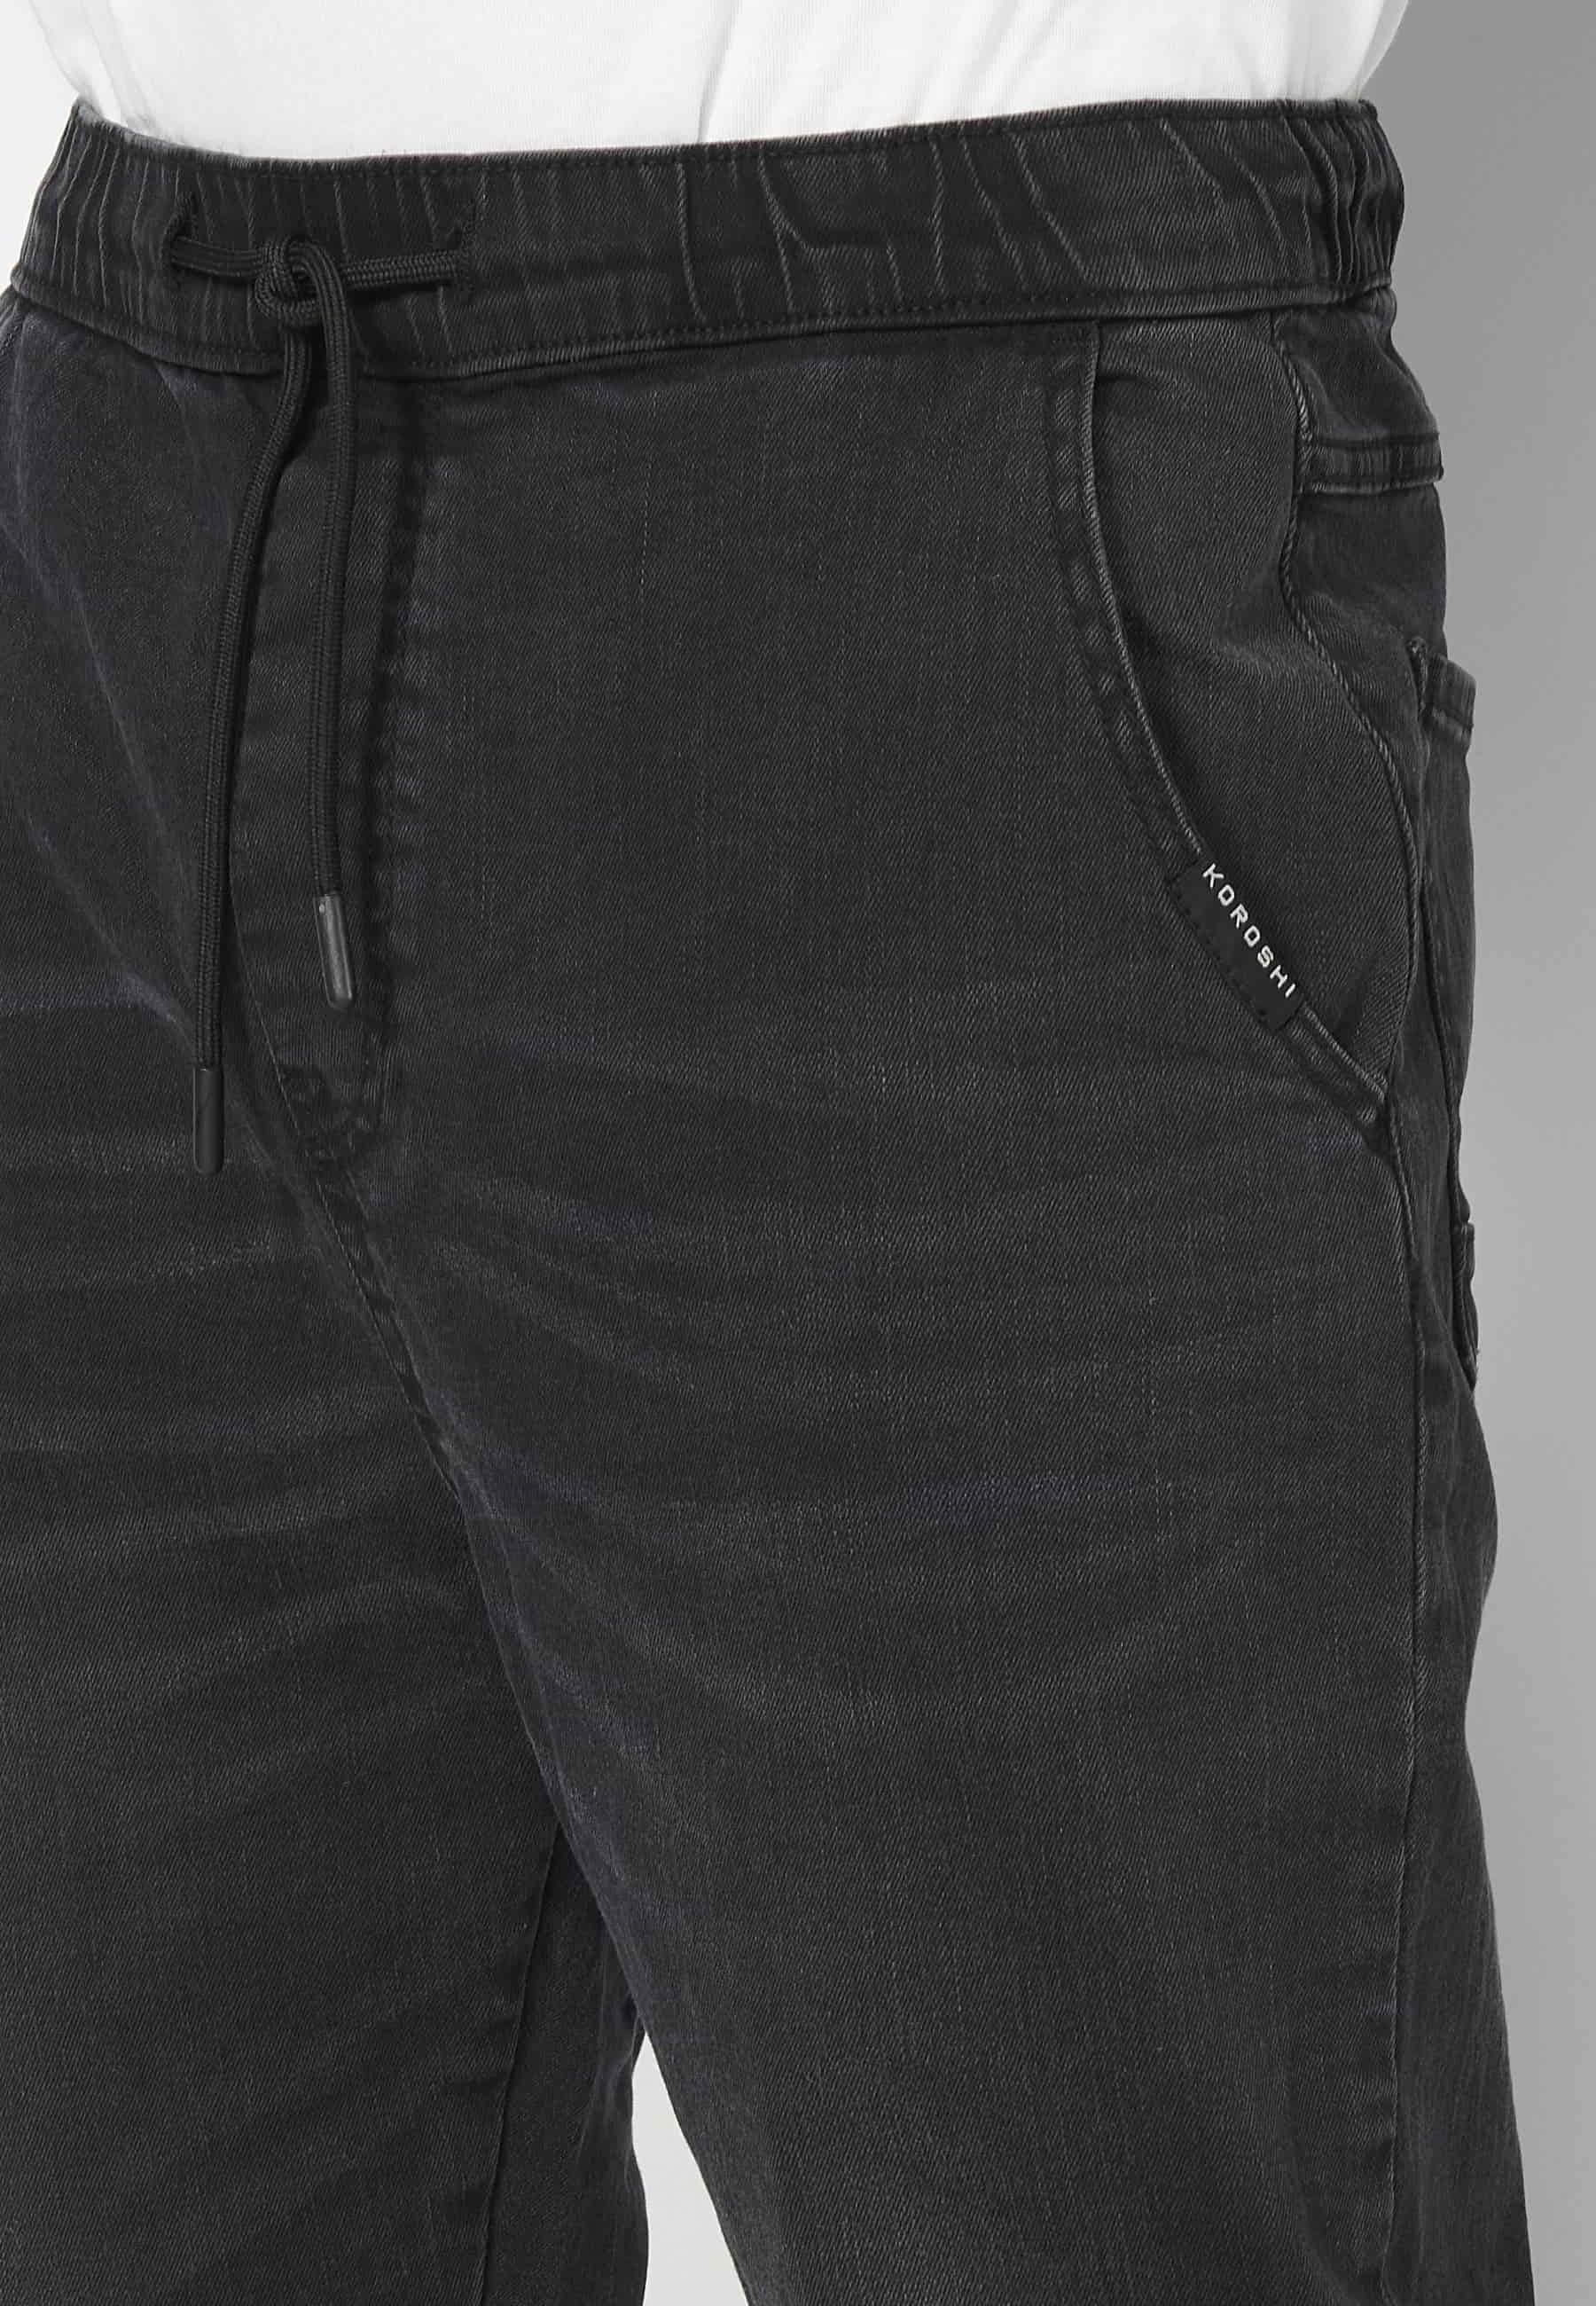 Black elastic waist long jogger pants for Men 5